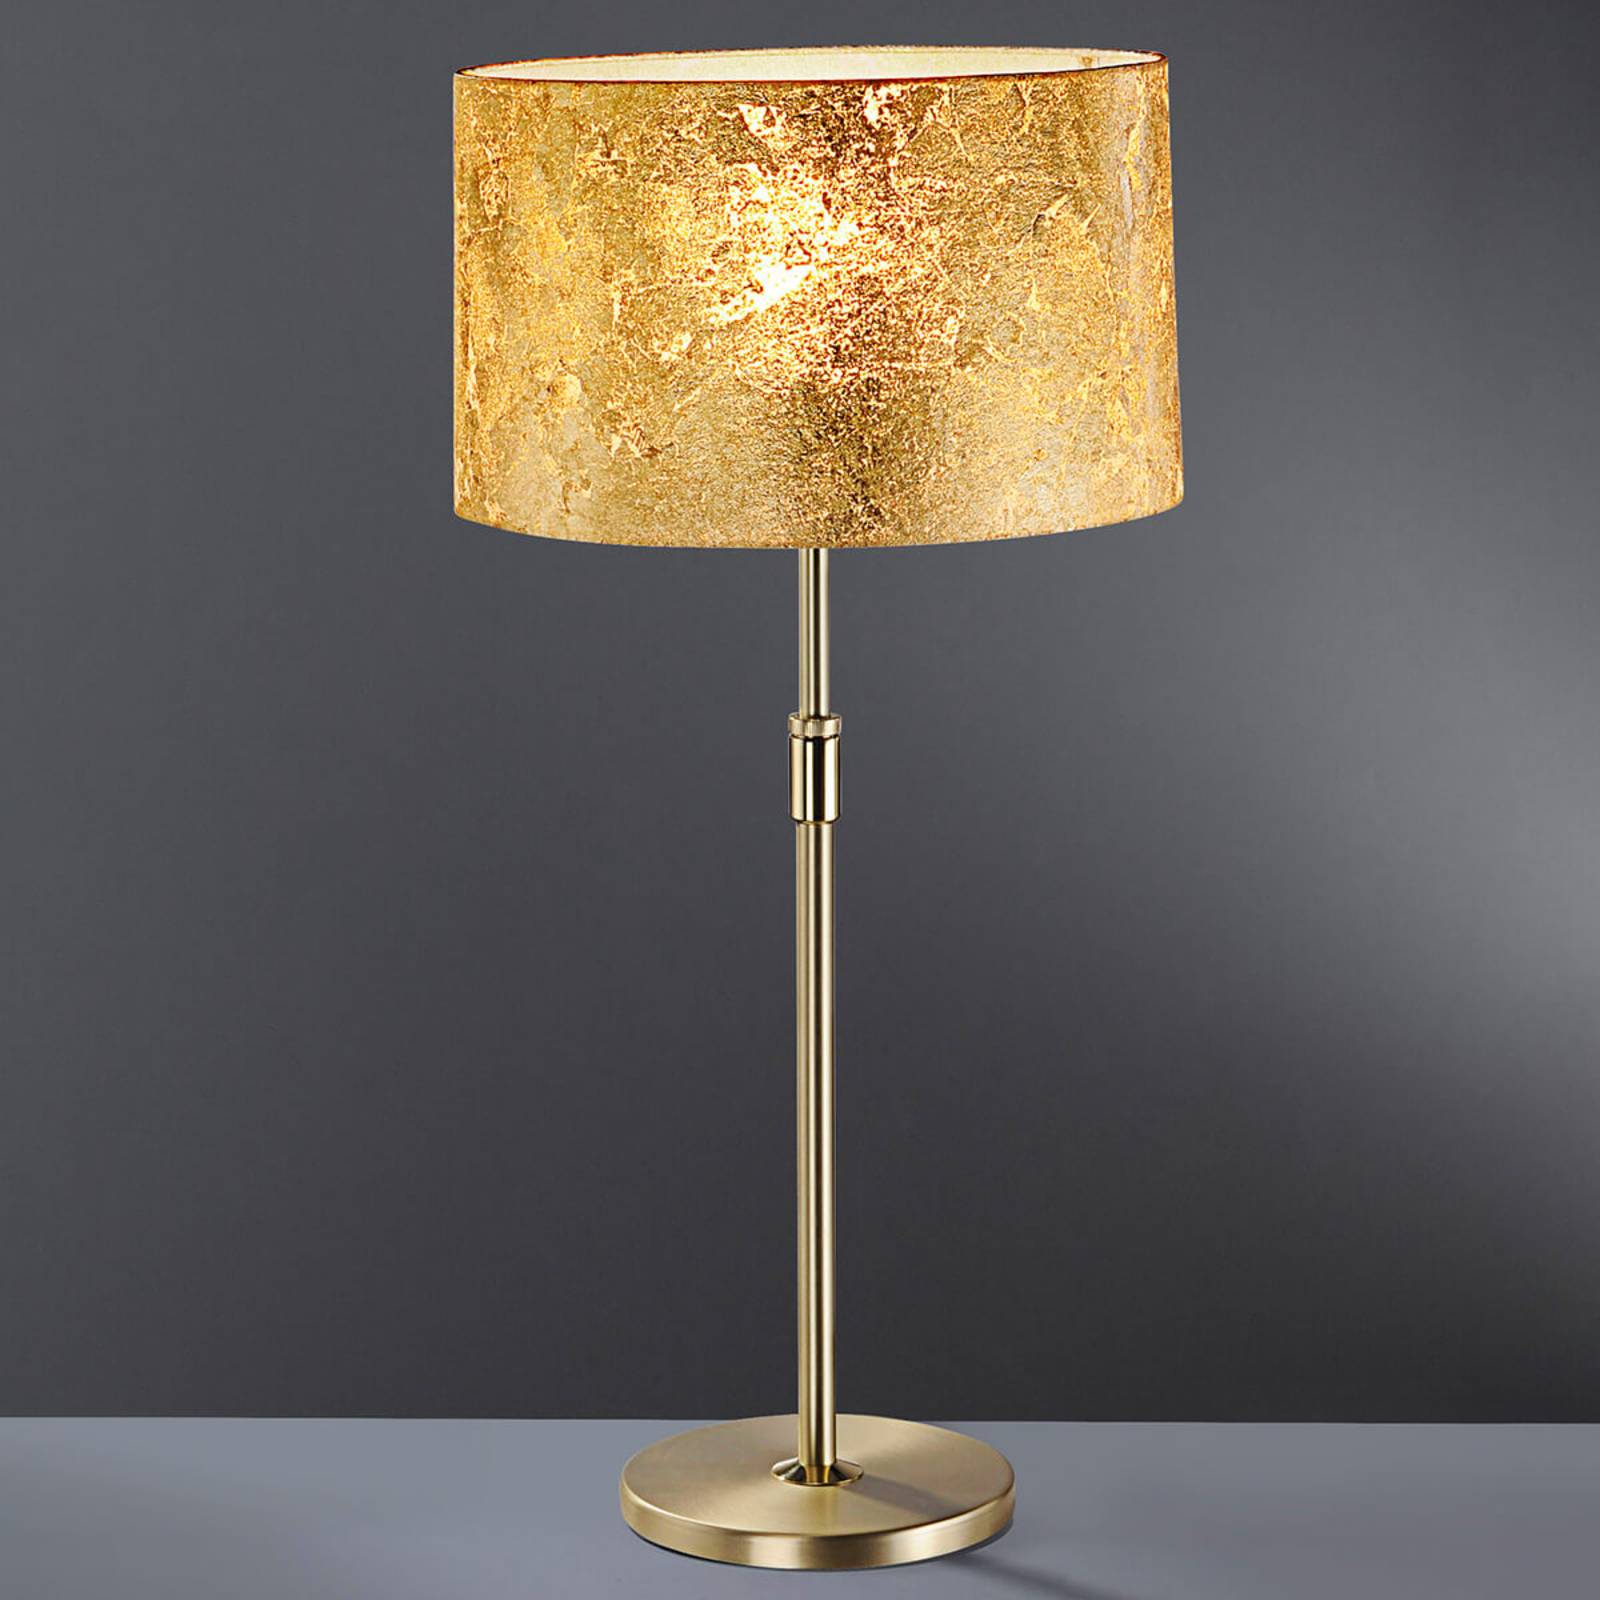 Image of Lampe à poser Loop feuille d'or 55 - 75 cm de haut 4011868915739